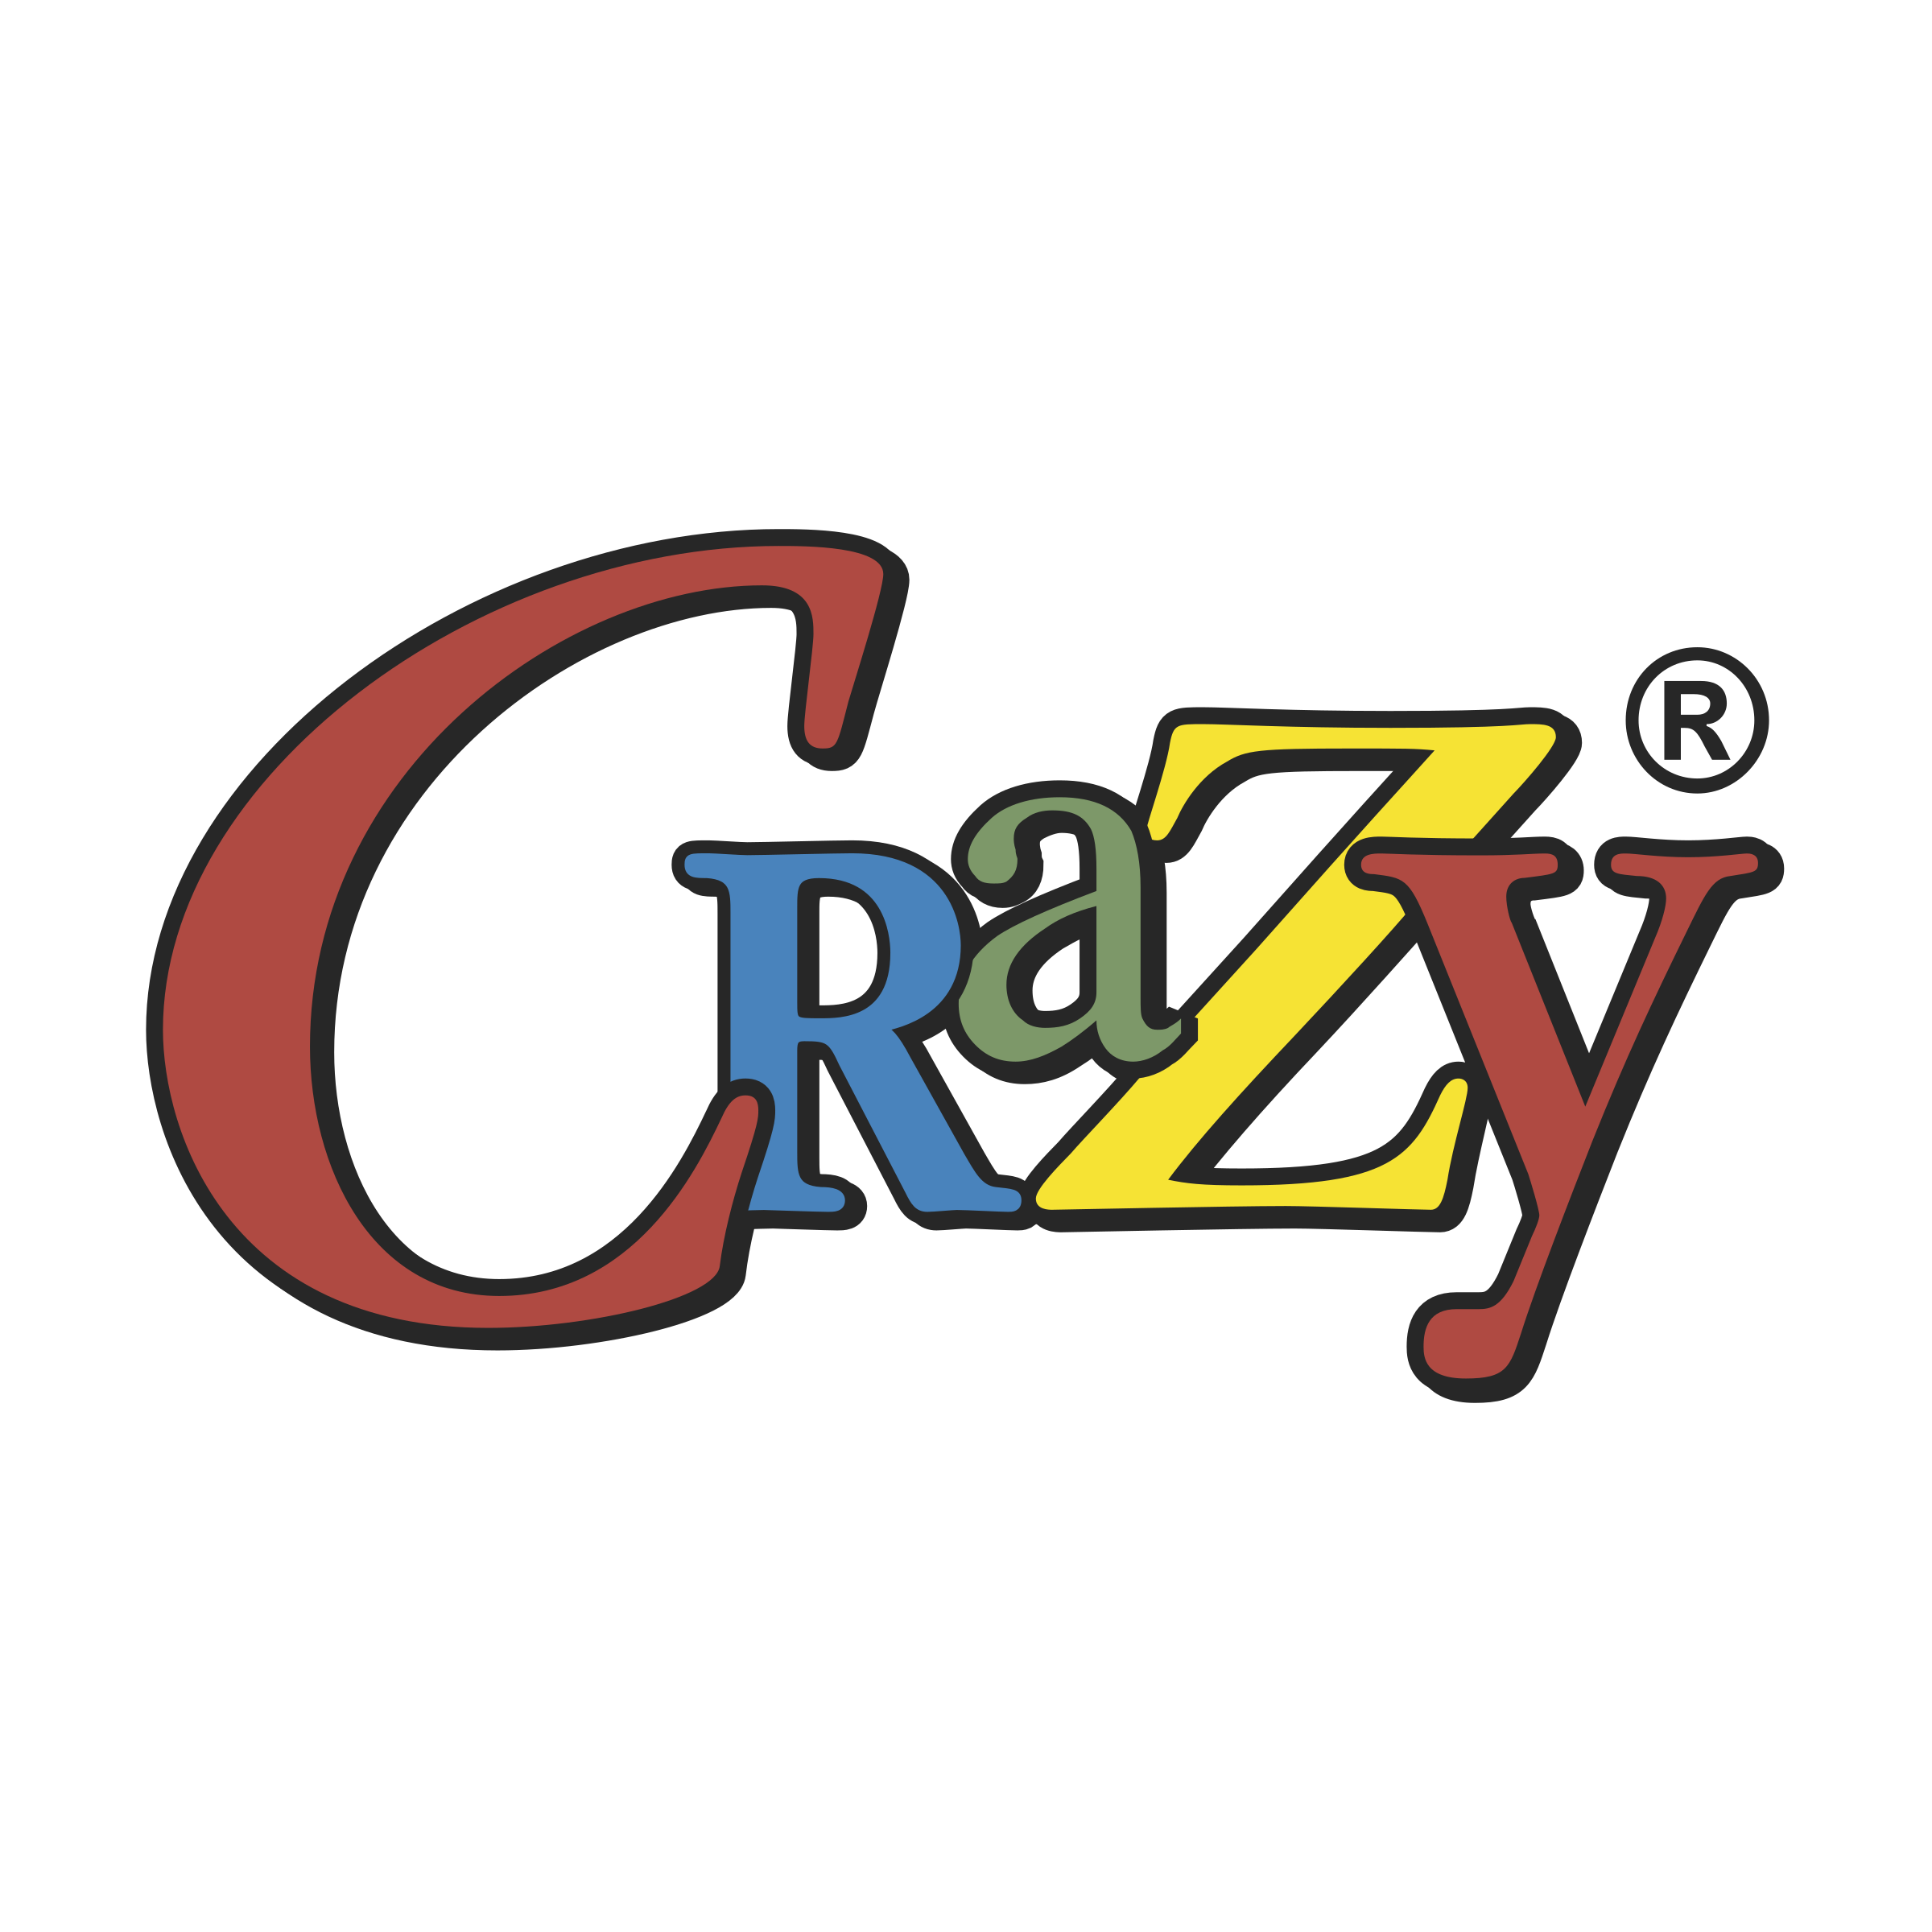 Crazy Logo PNG Transparent & SVG Vector.